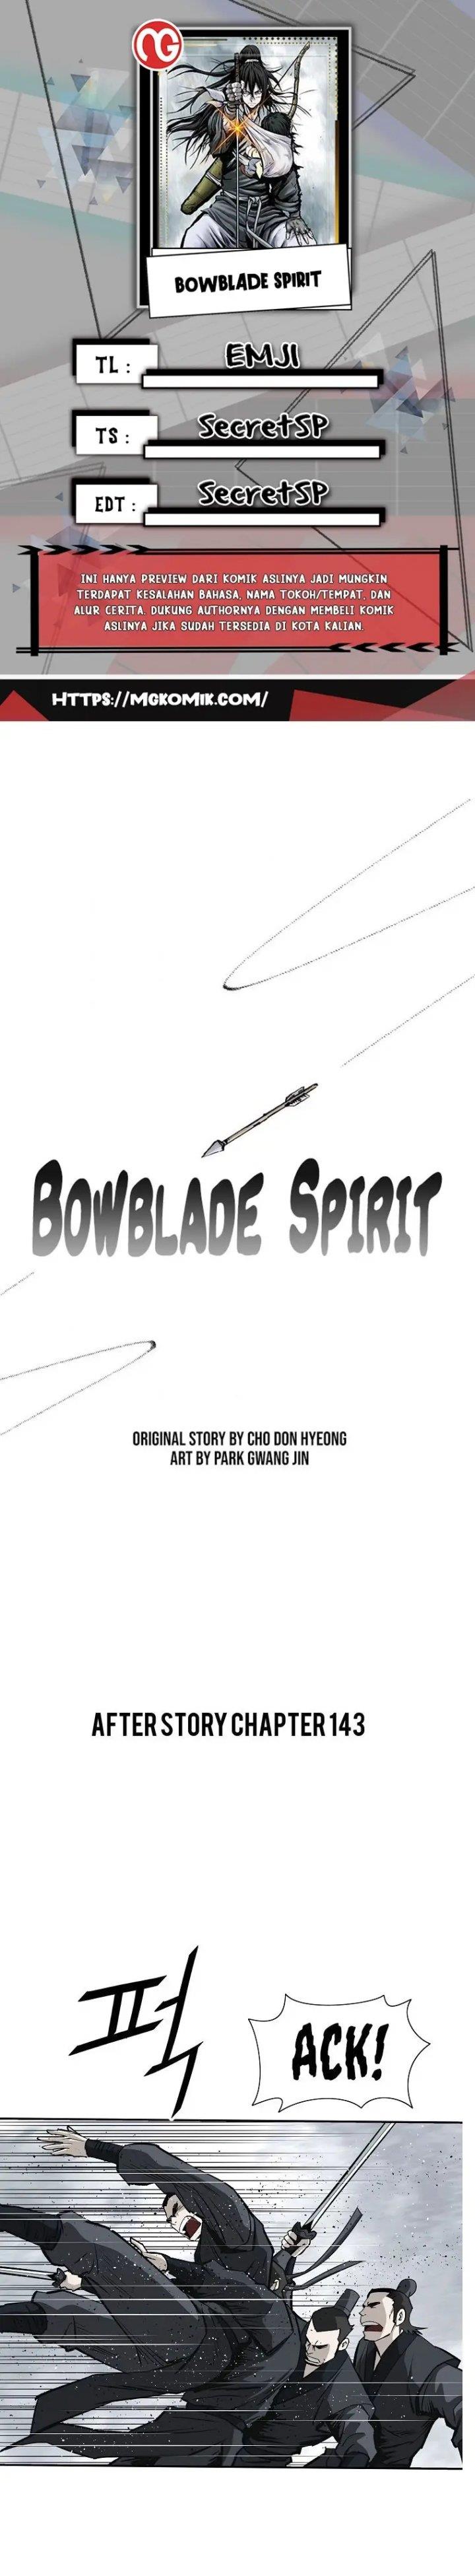 Bowblade Spirit Chapter 143